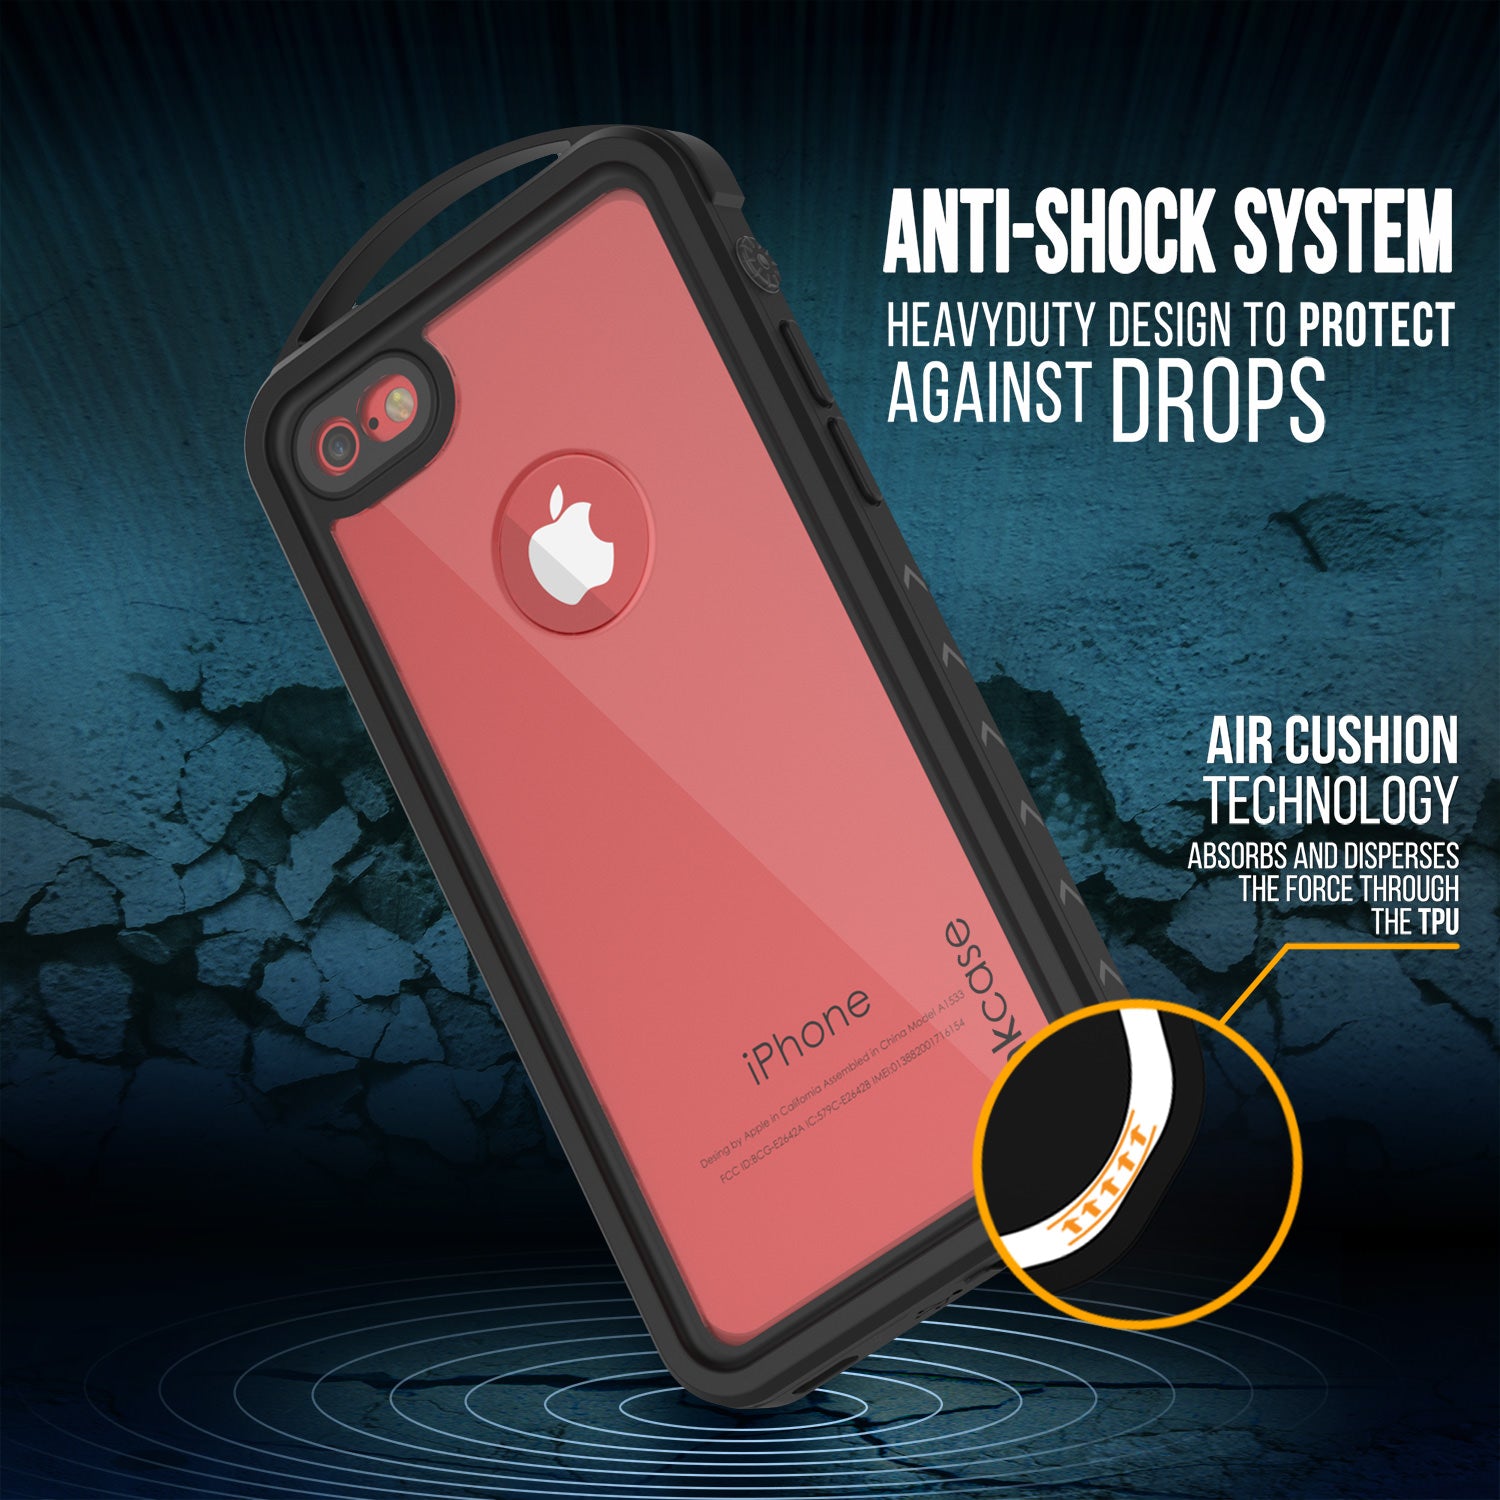 iPhone 7 Waterproof Case, Punkcase ALPINE Series, CLEAR | Heavy Duty Armor Cover